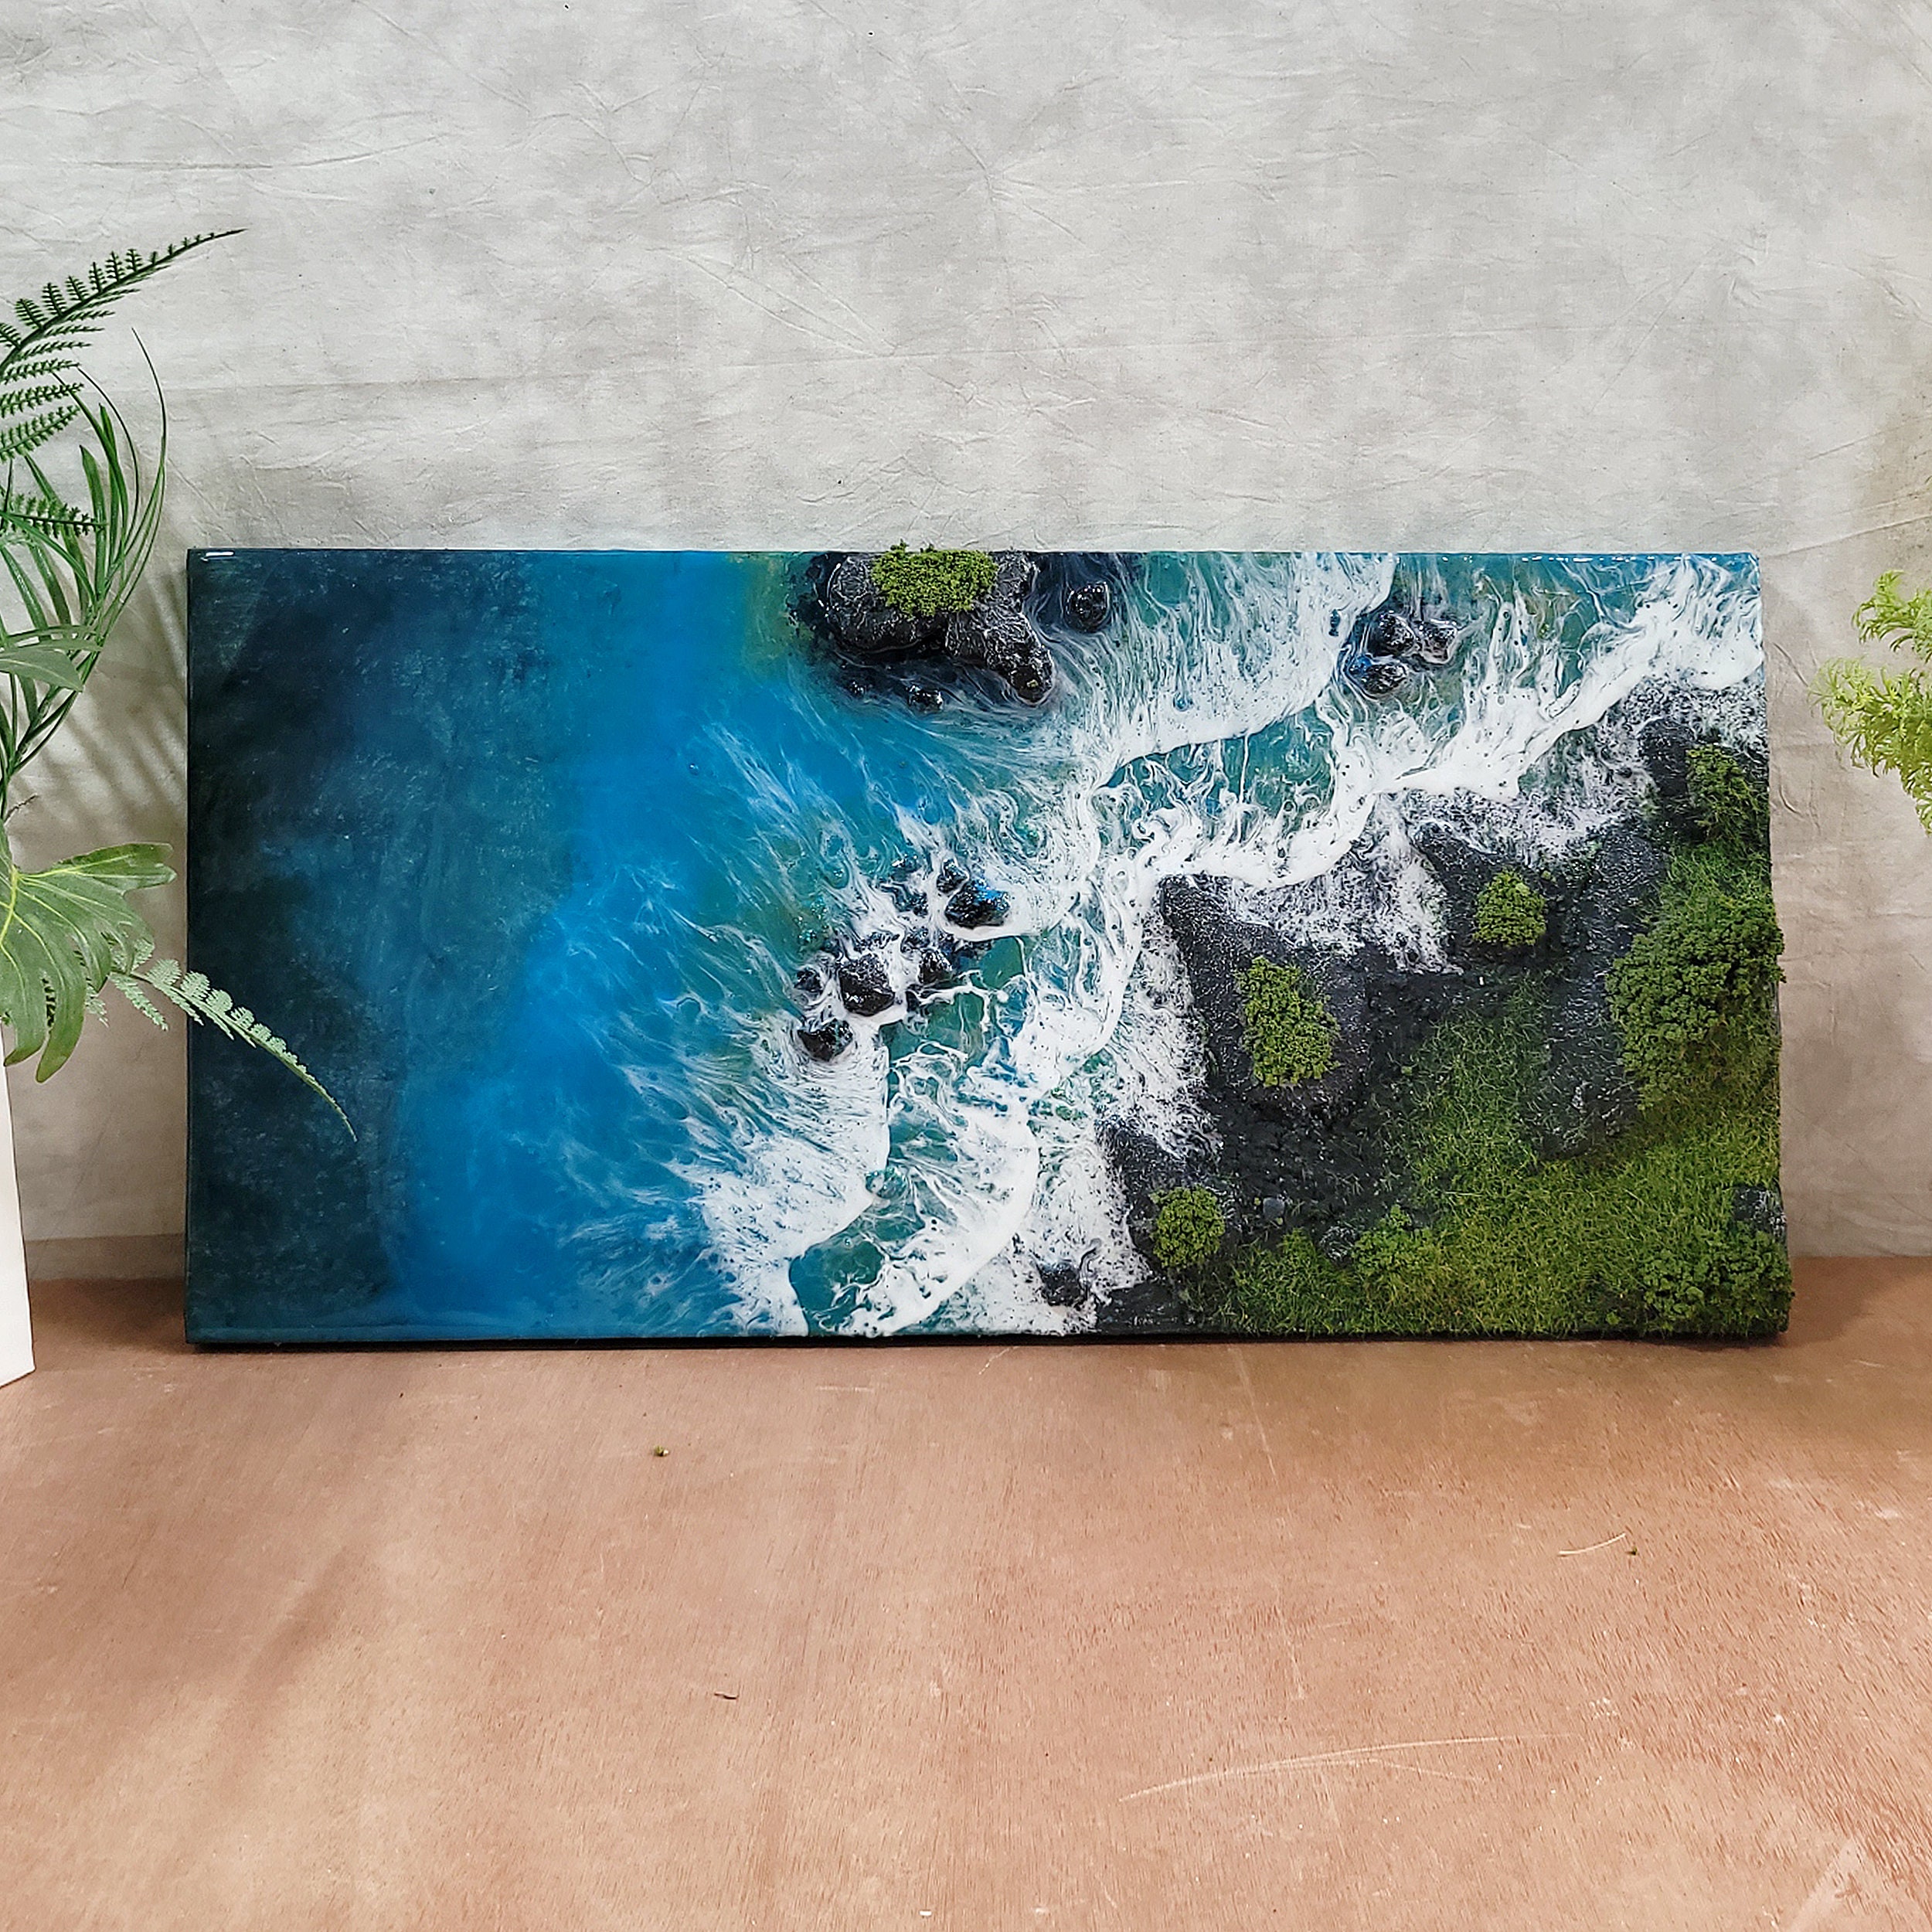 Epoxy Resin Abstract Original Painting Coast , Art Resin Epoxy Fluid  Painting Seascape Sky Ocean Waves, Resin Painting, Wall Art Decor 